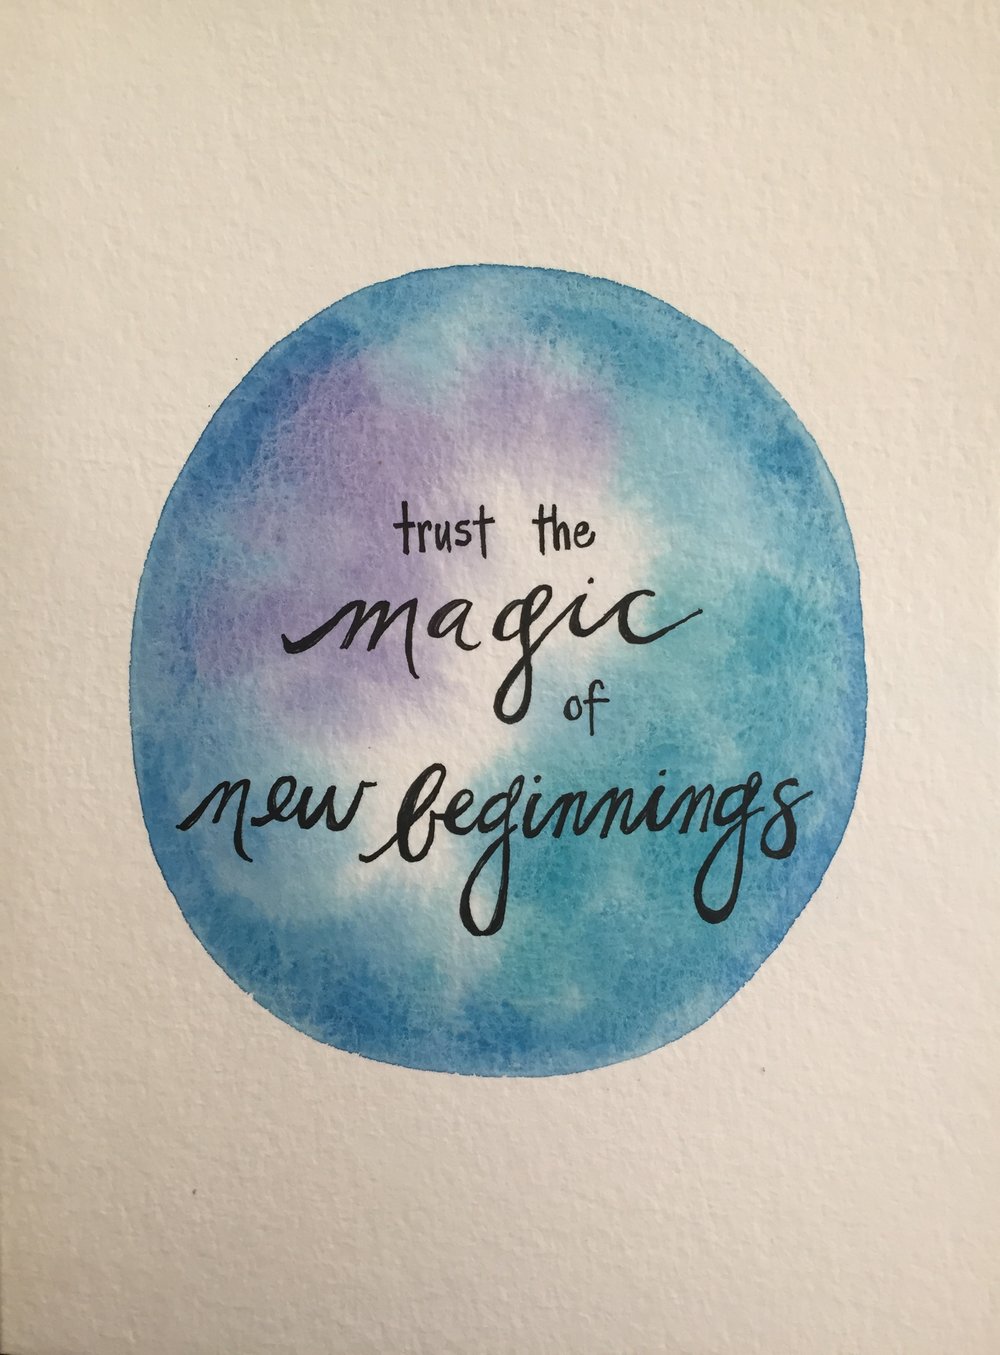 New Beginnings. — Julianne Kanzaki